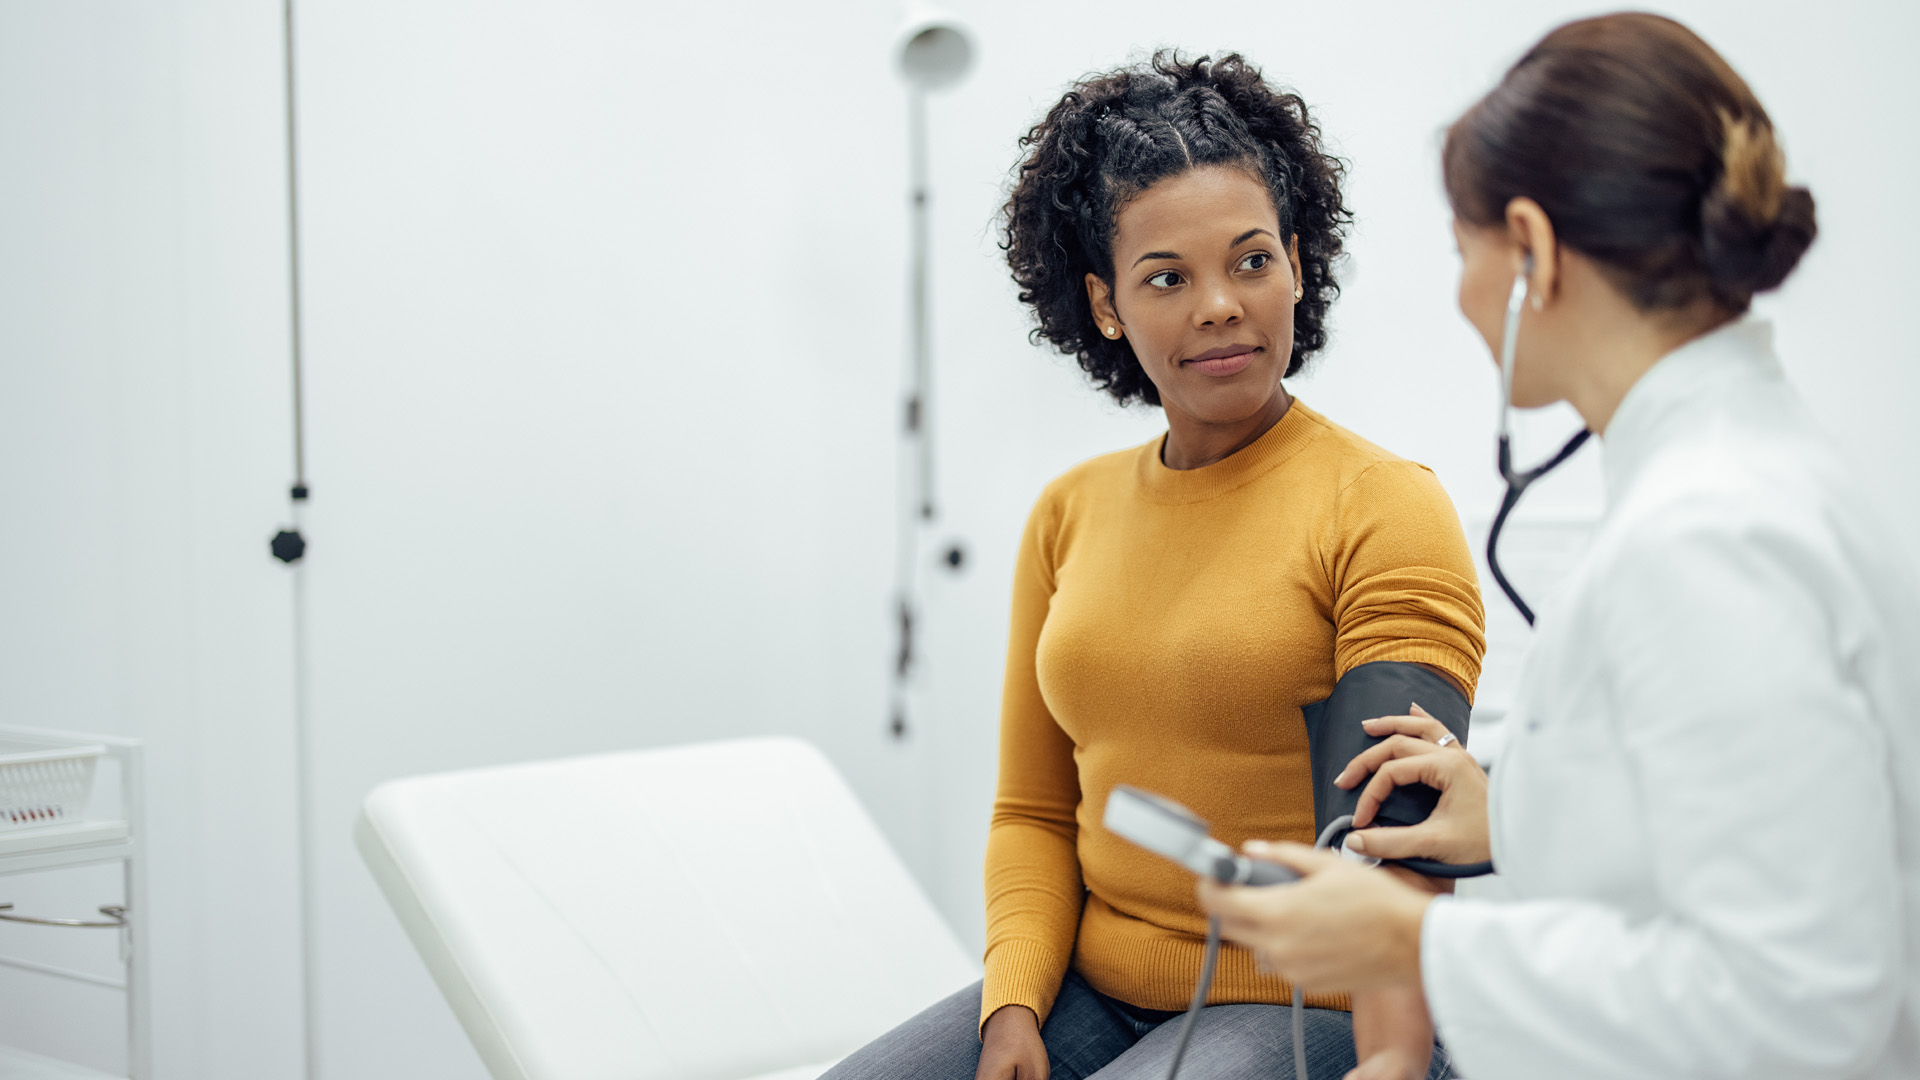 A healthcare professional checks a patient’s blood pressure